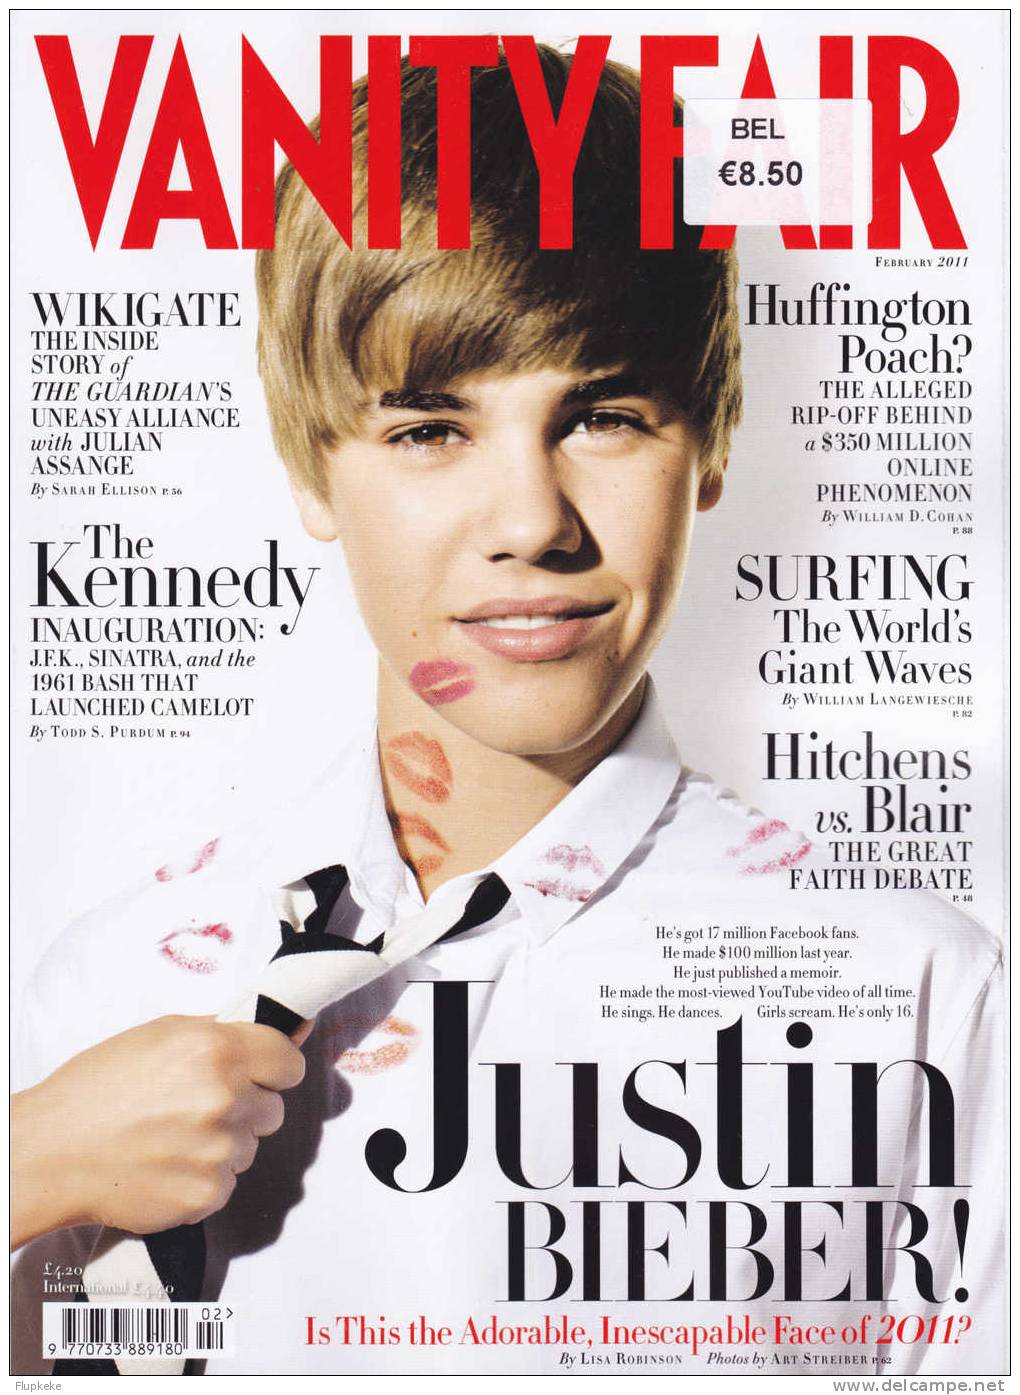 Vanity Fair 606 February 2011 Cover Justin Bieber - Entertainment